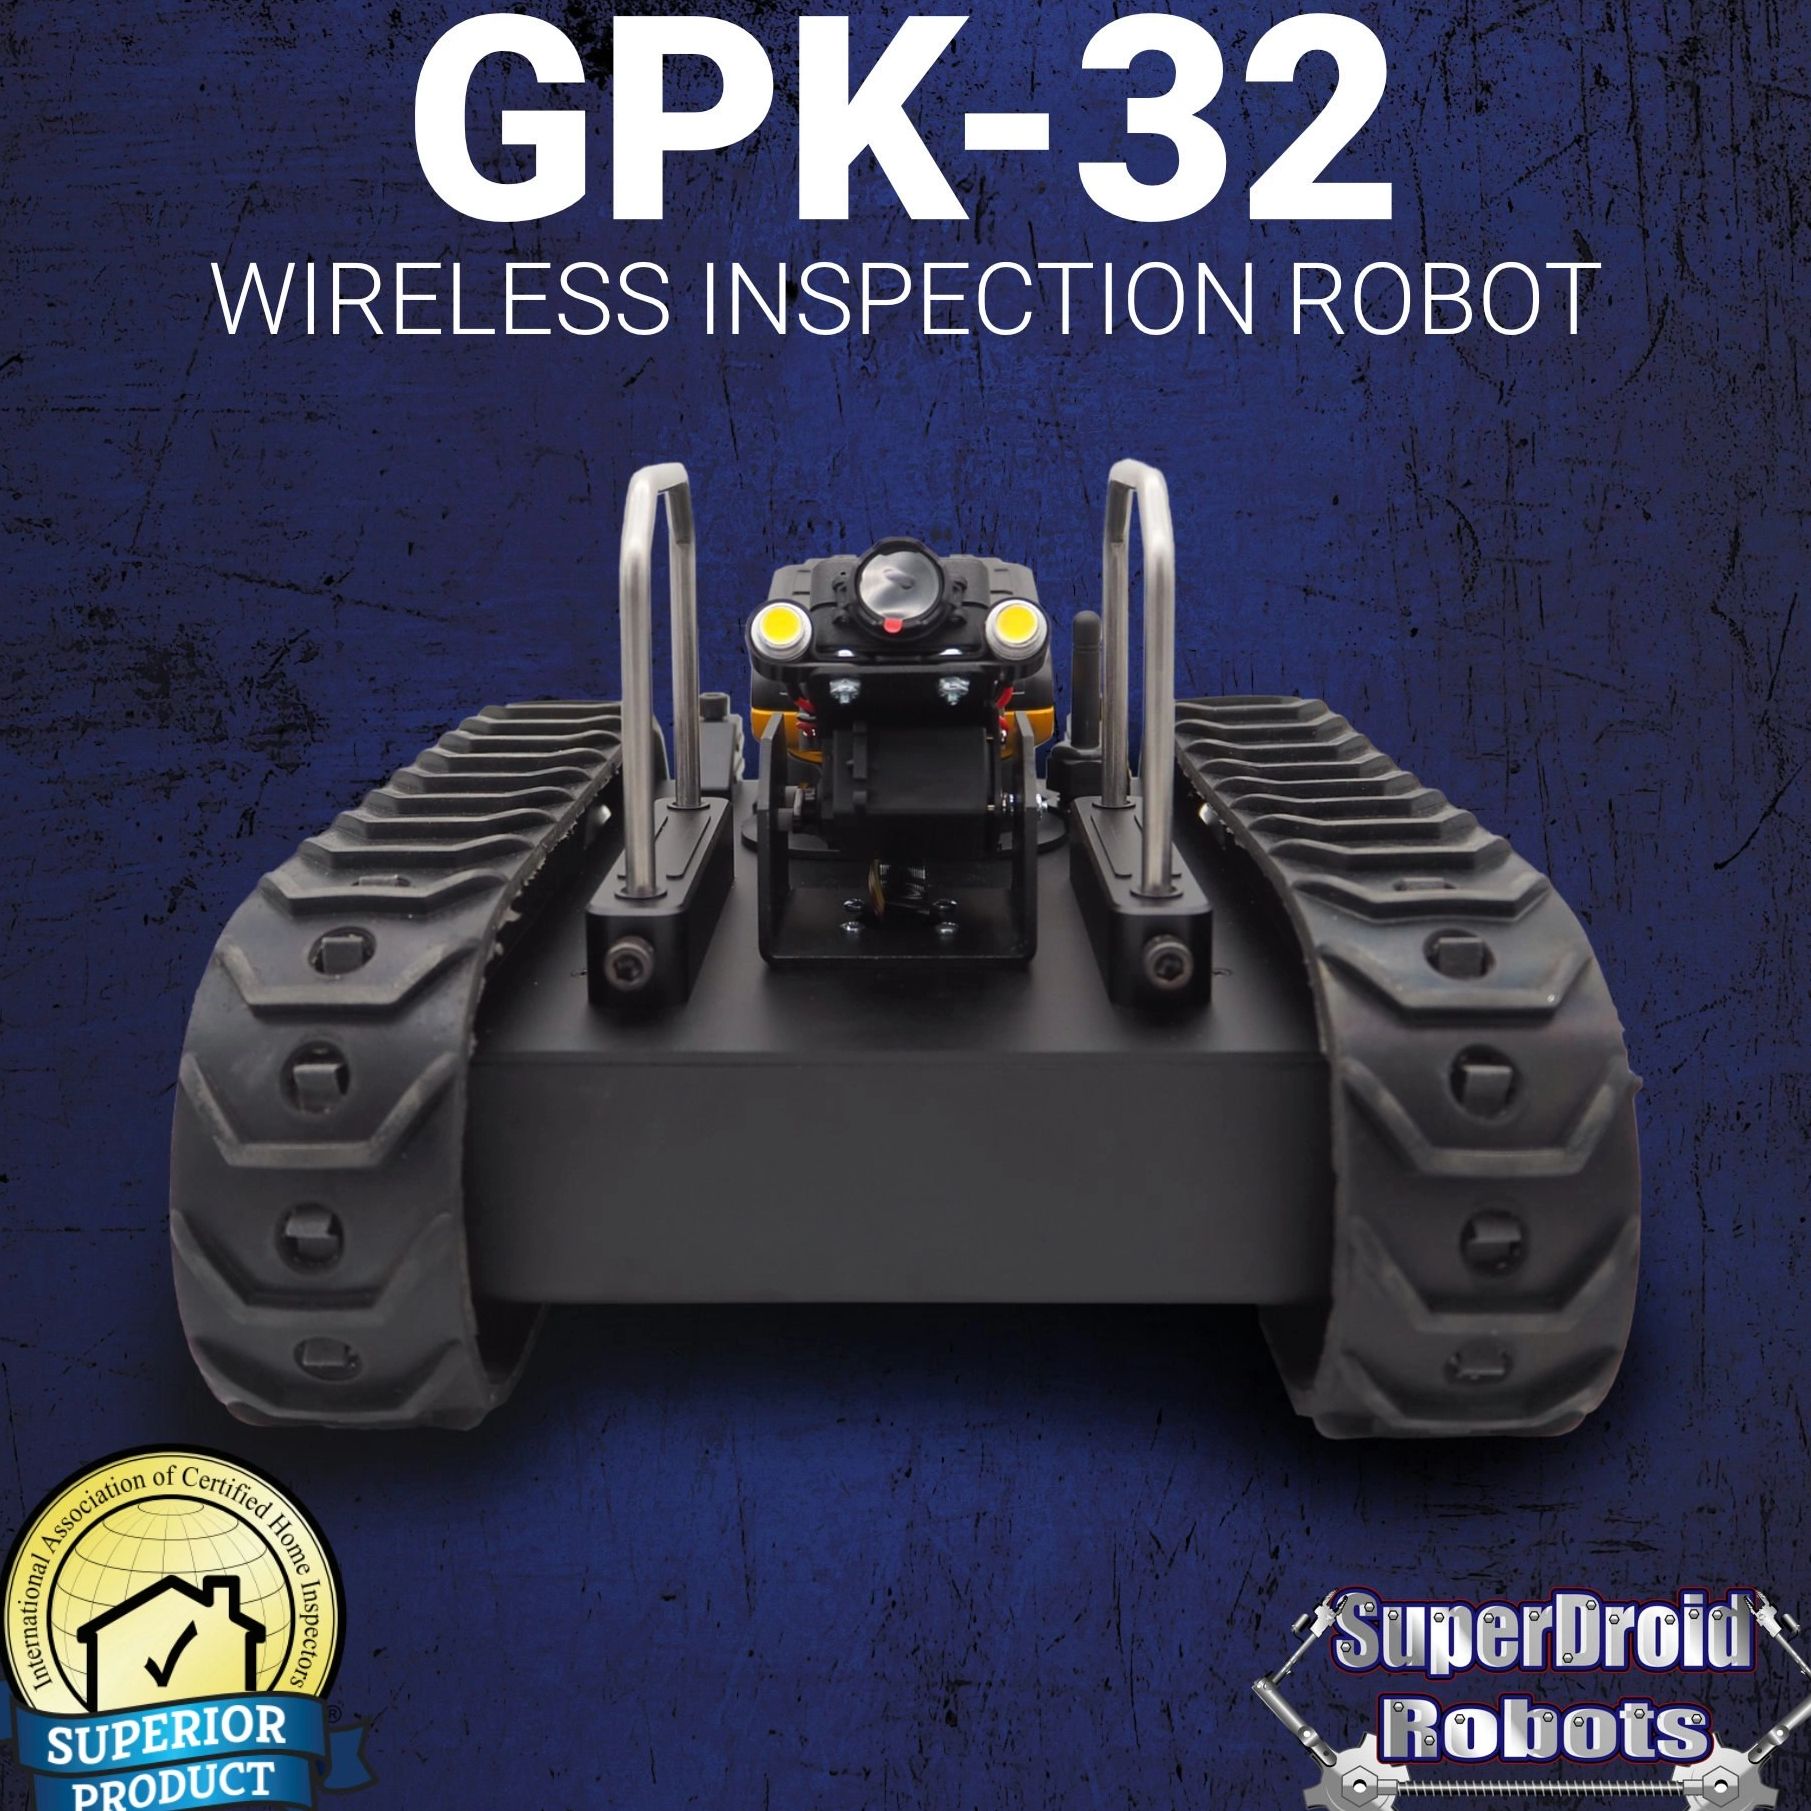 Wireless Inspection Robot GPK-32